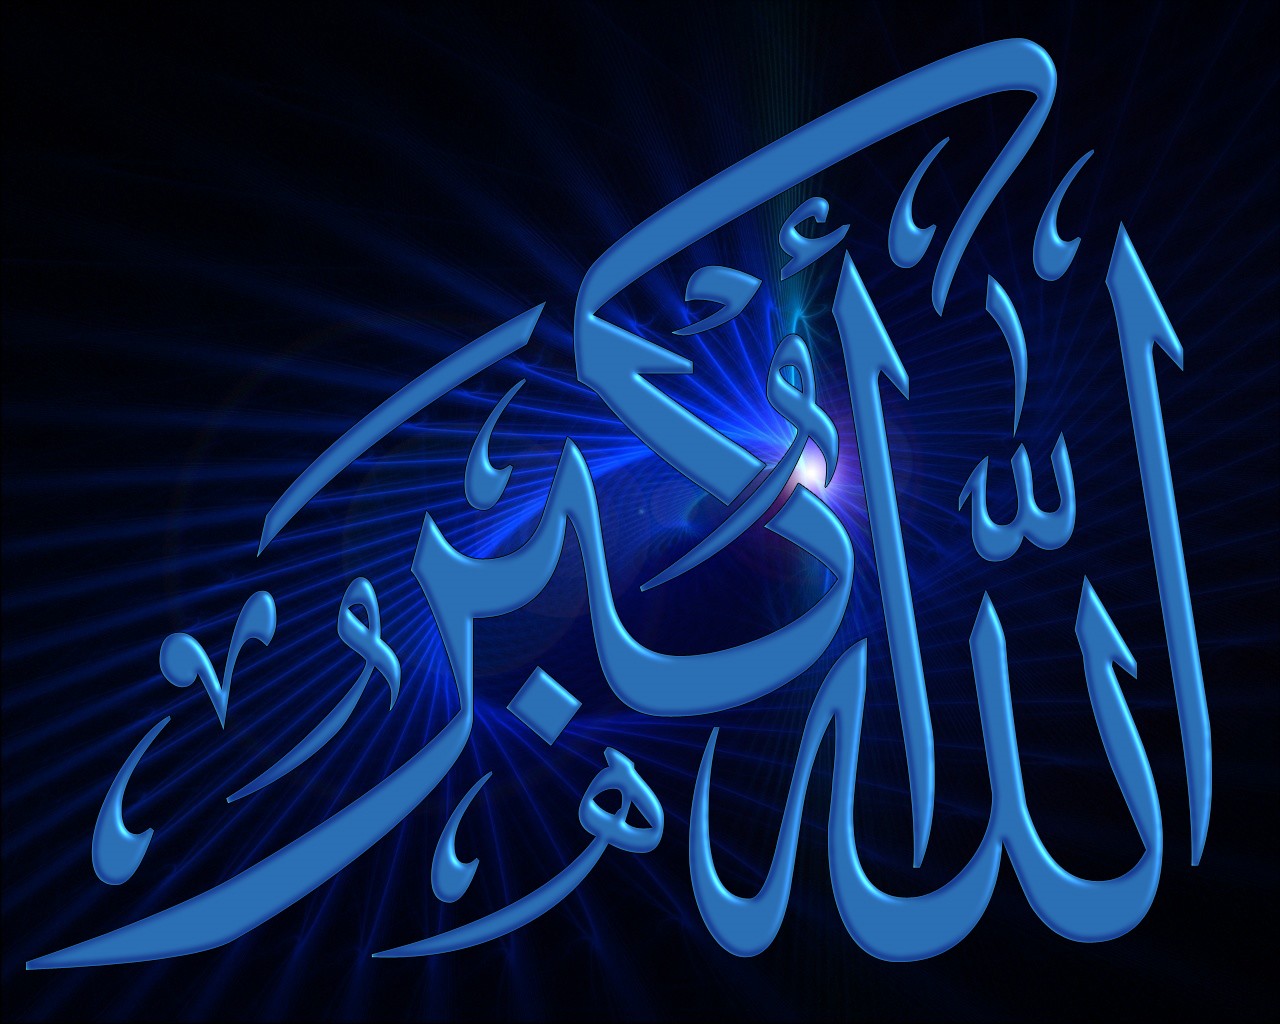 Super Islamic Themes: allah name image